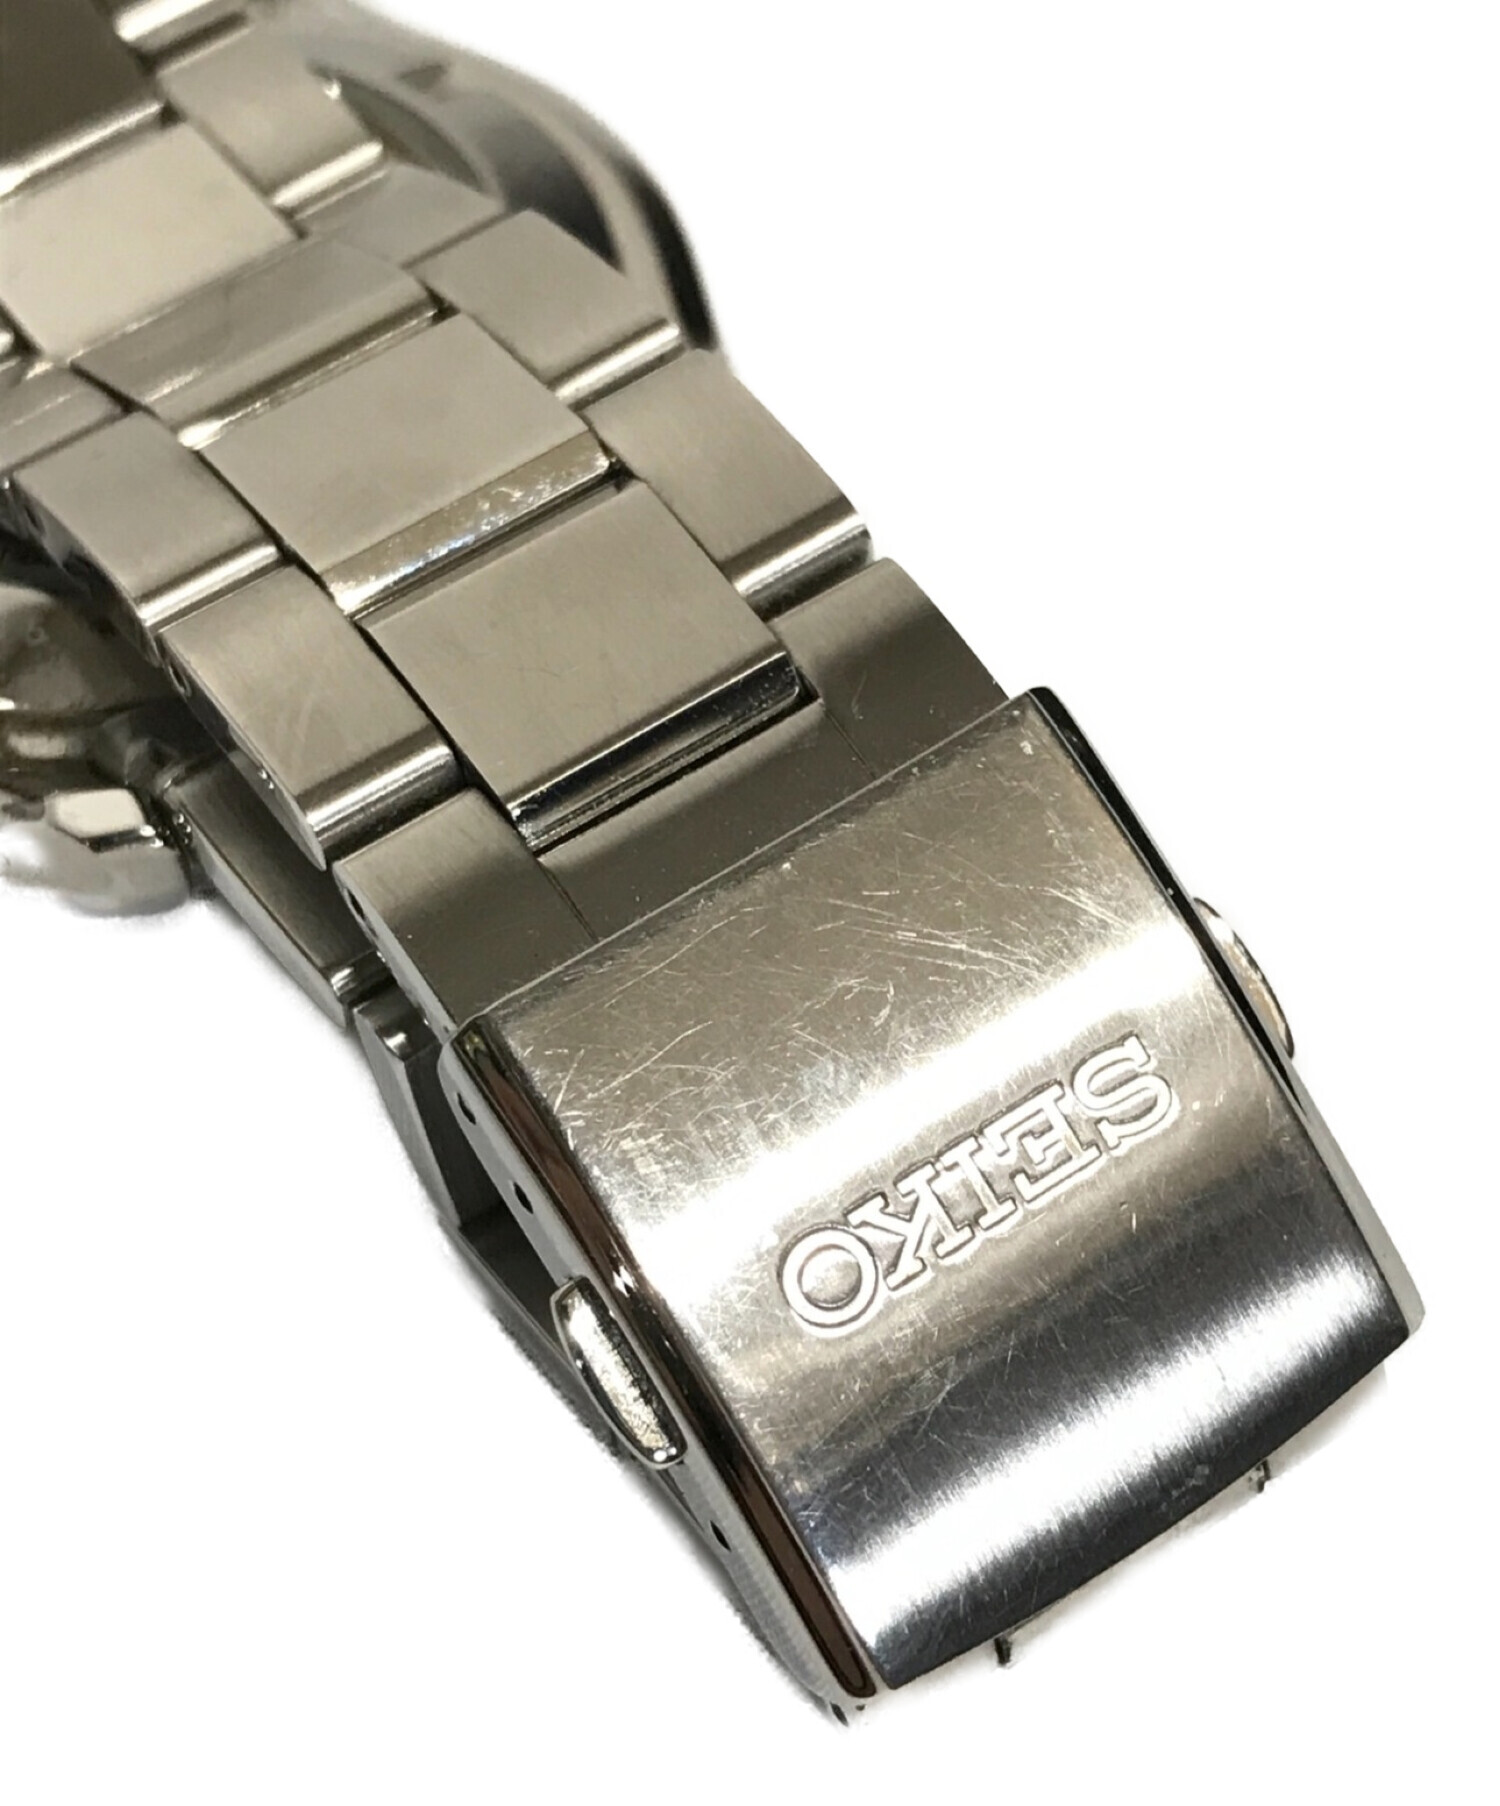 SEIKO (セイコー) プレサージュ メカニカル 自動巻き 腕時計 ブラック サイズ:記載なし